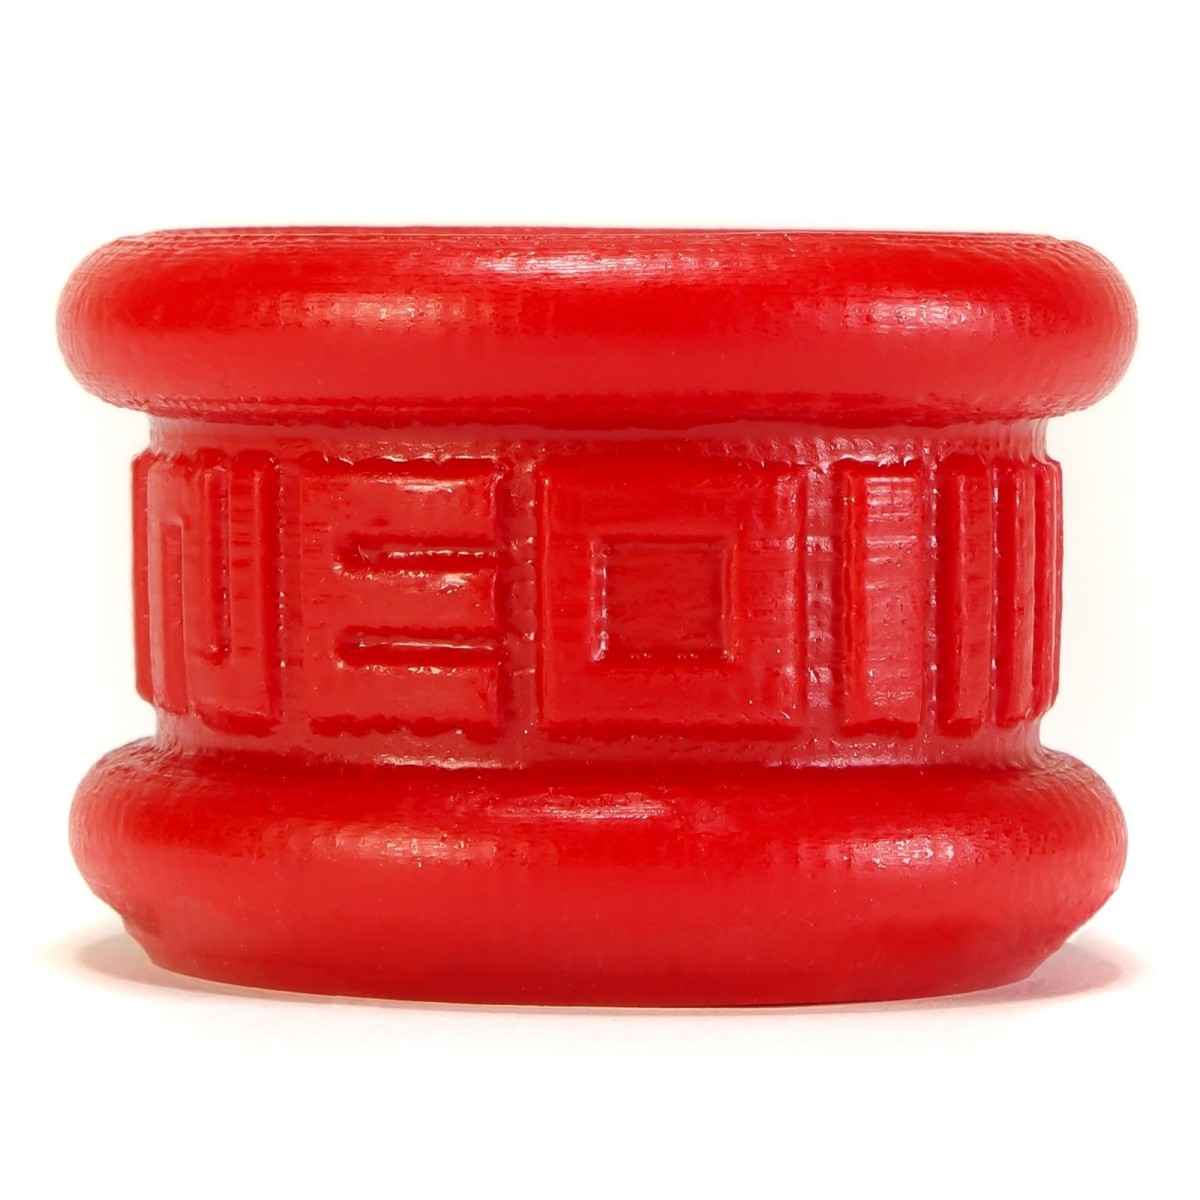 Natahovač varlat Oxballs Neo krátký červený, silikonový natahovač varlat 3,2 cm